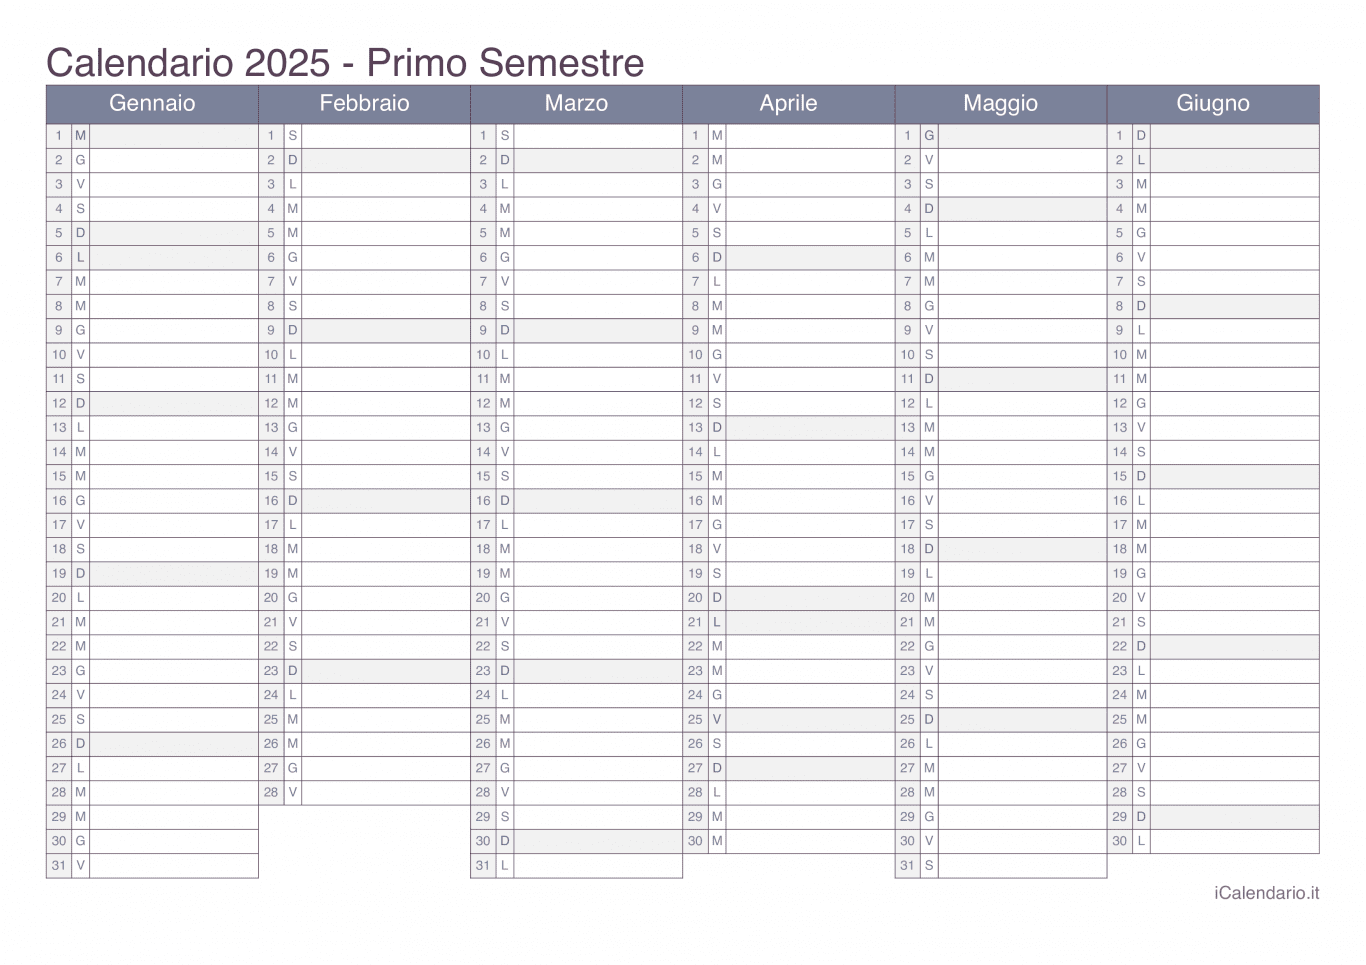 Calendario semestrale 2025 - Office